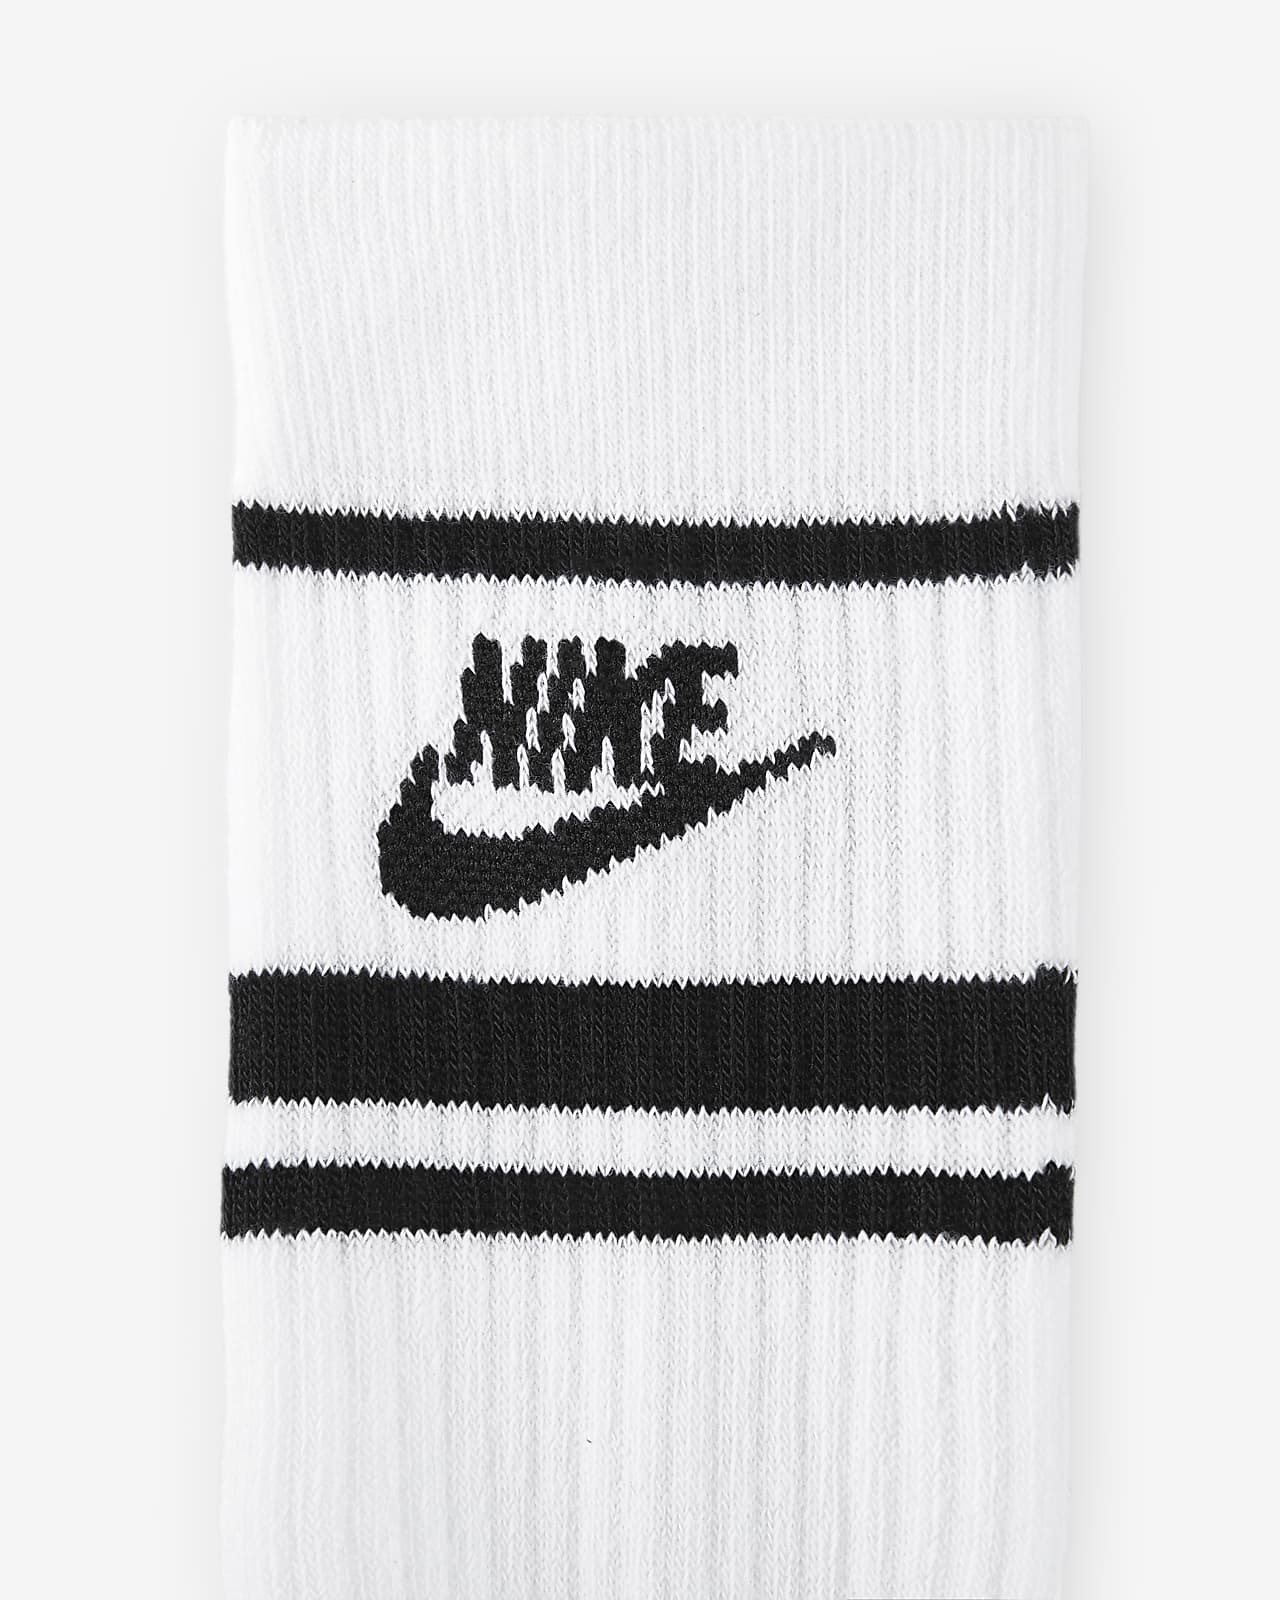 Nike Everyday Essential 3 pack socks in white/blue